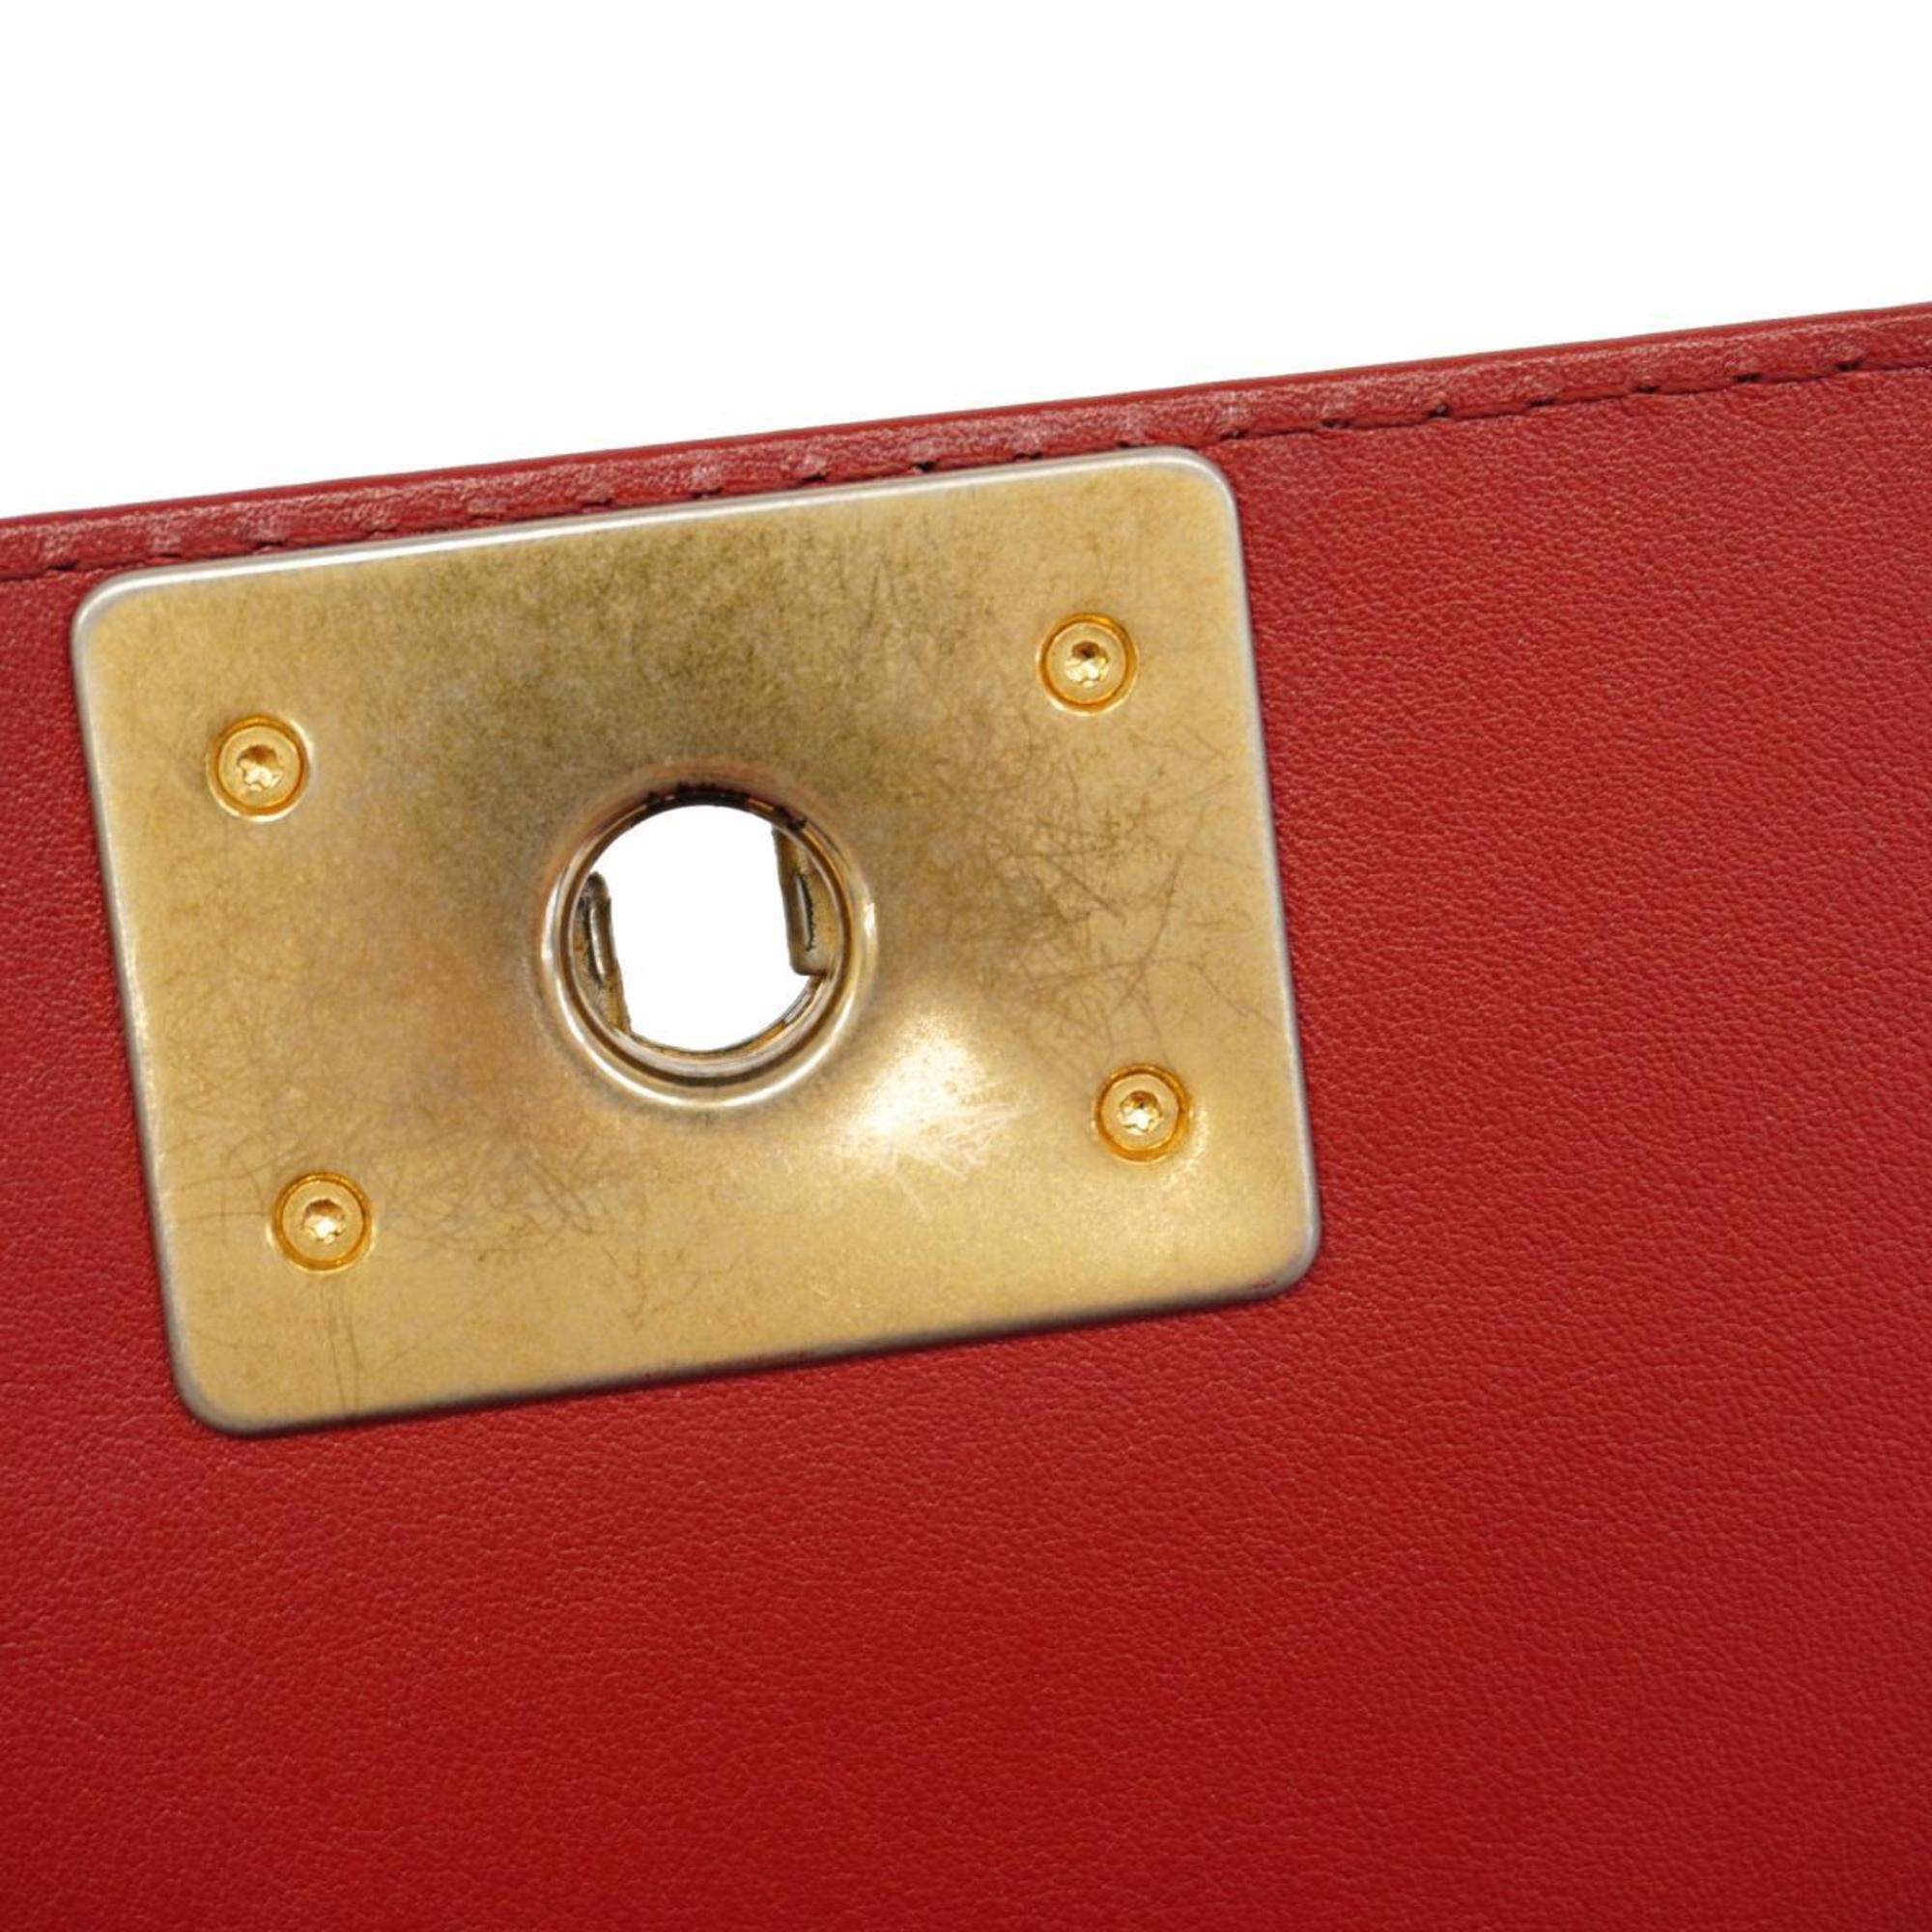 Chanel Handbag Boy Chain Shoulder Lambskin Red Women's